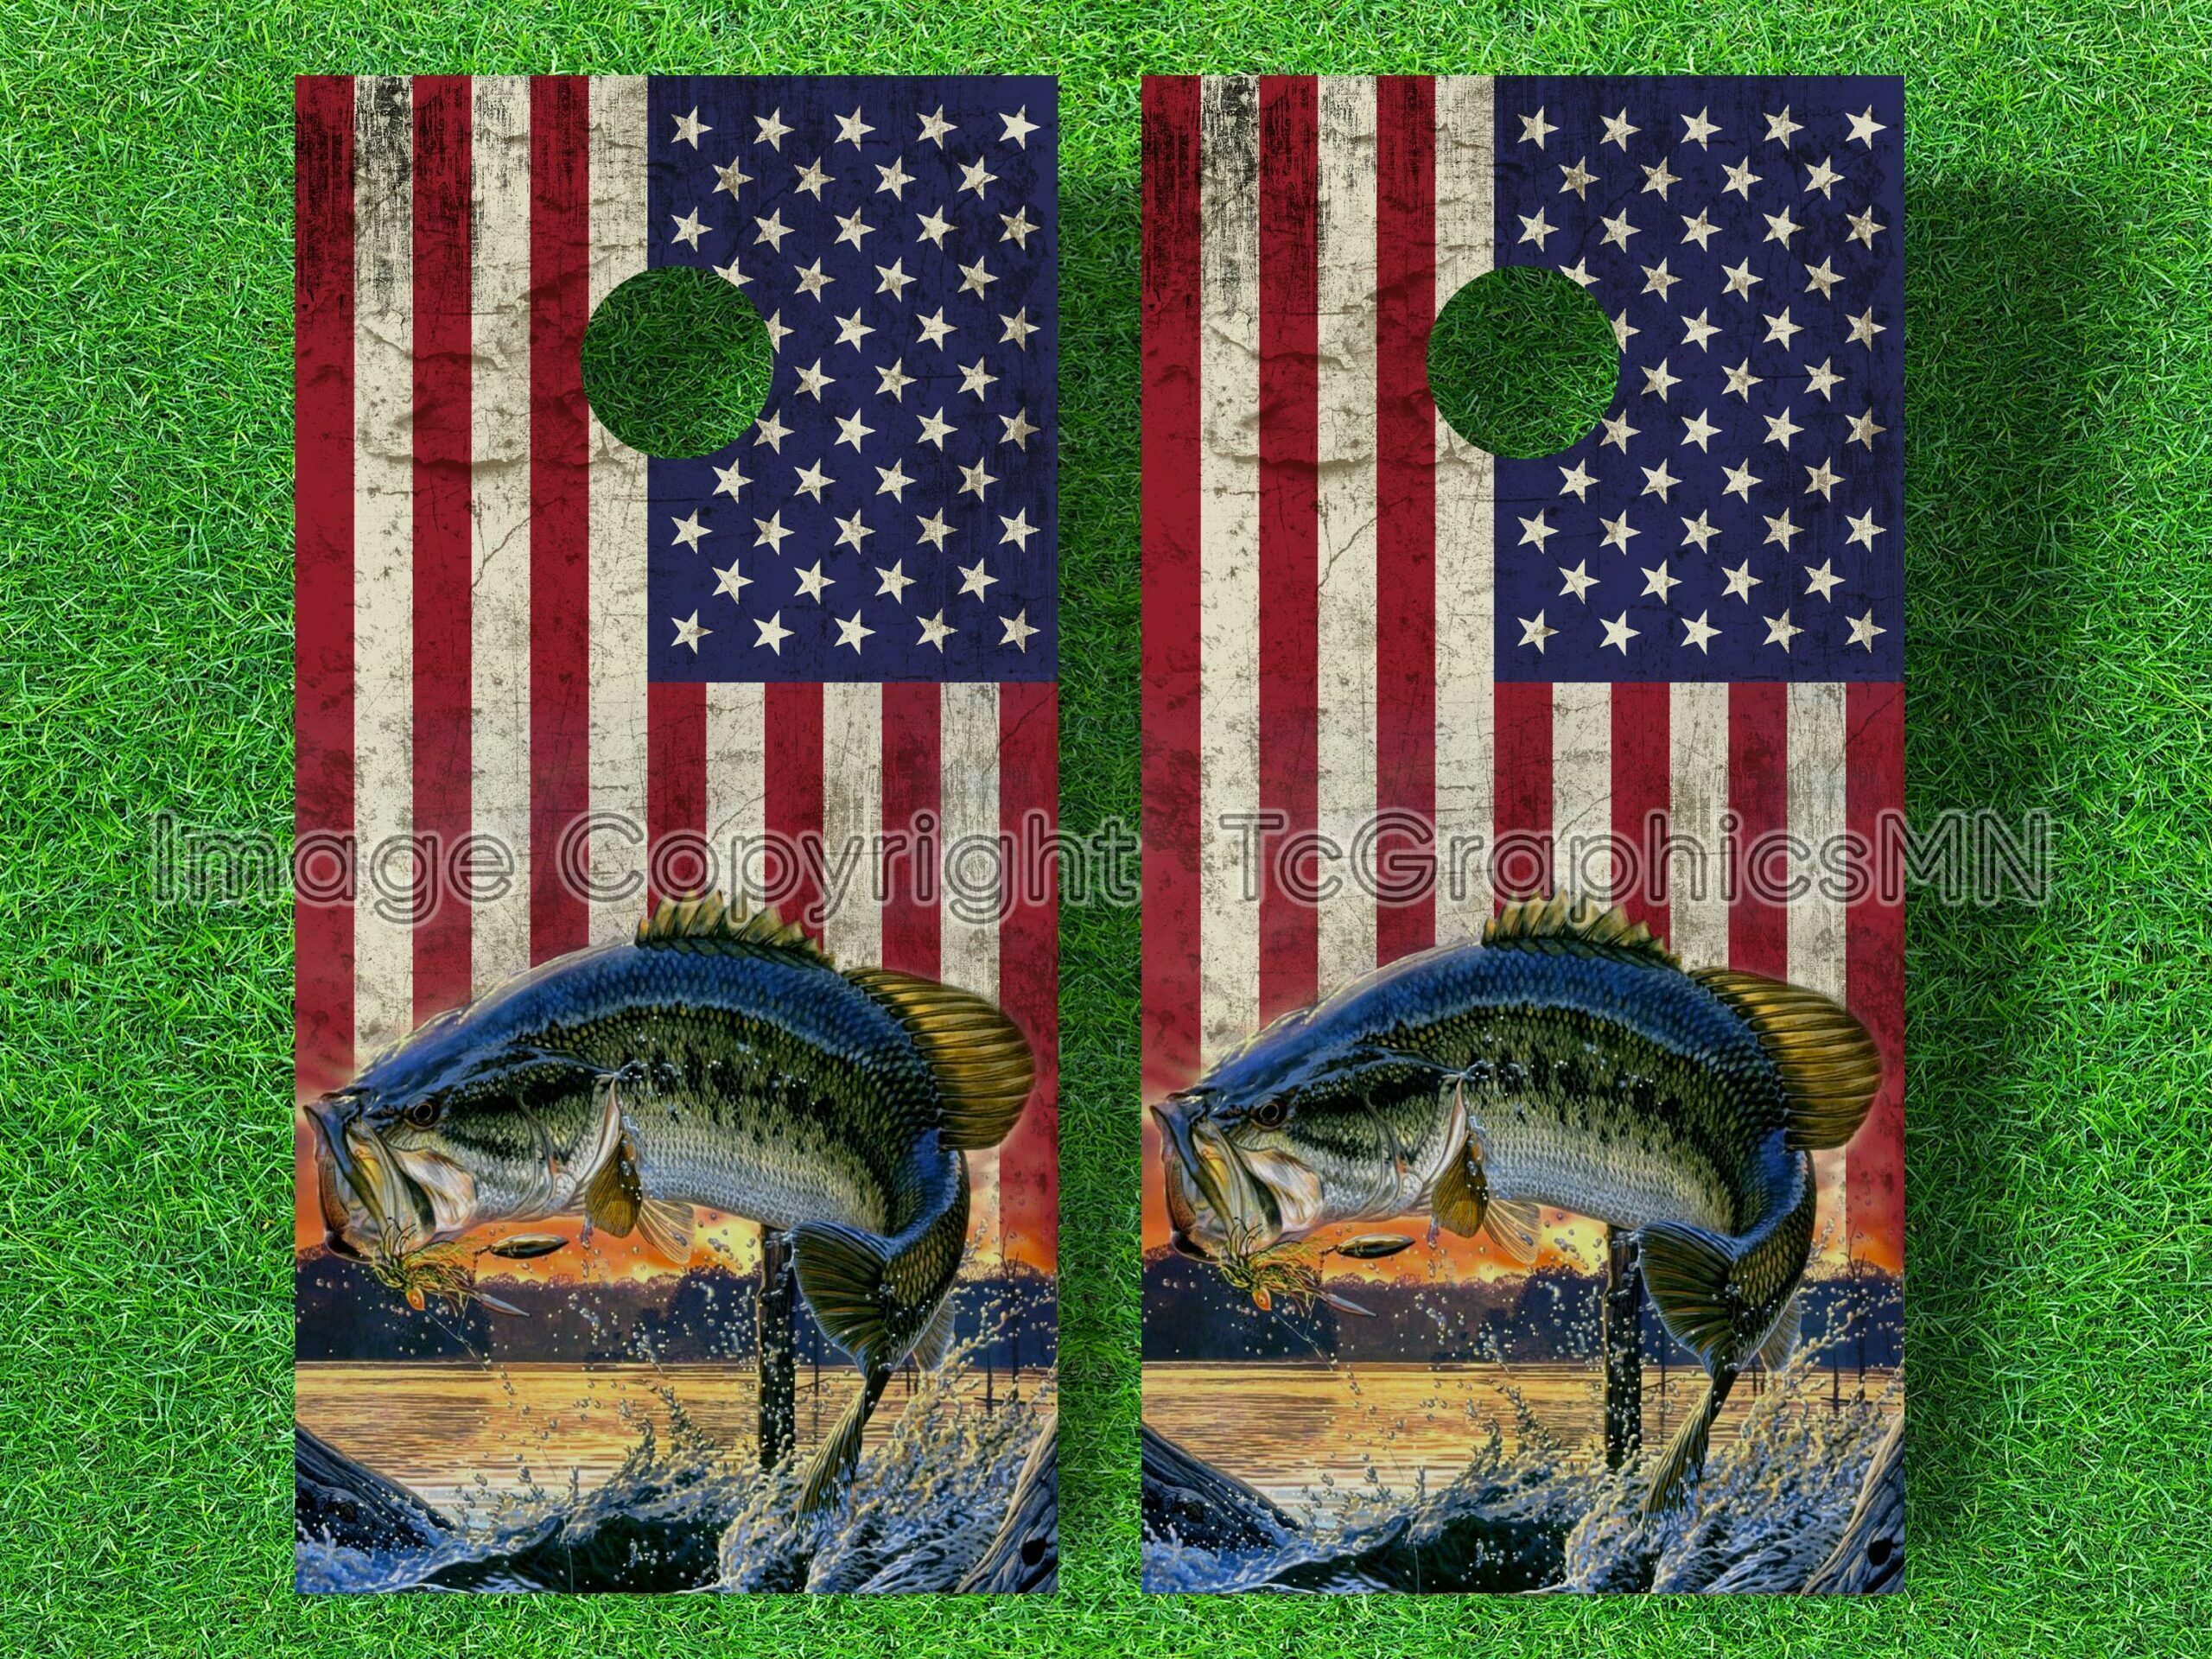 https://tcgraphicsmn.com/wp-content/uploads/2022/06/US-Flag-Bass-Fishing-Cornhole-Decal-scaled.jpg